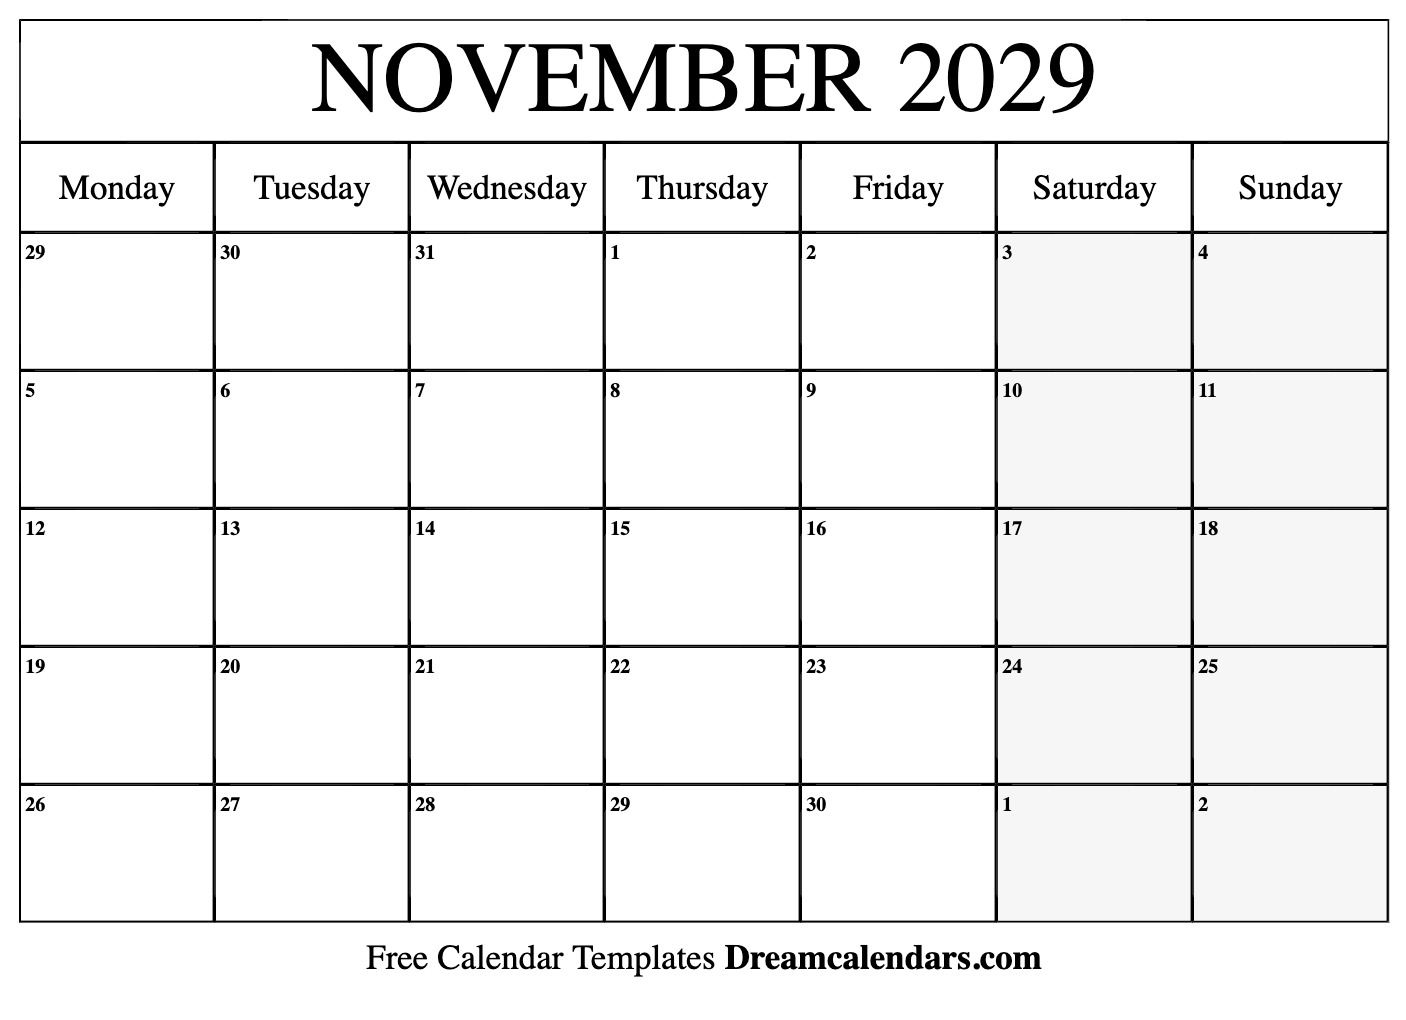 november-2029-calendar-free-blank-printable-with-holidays